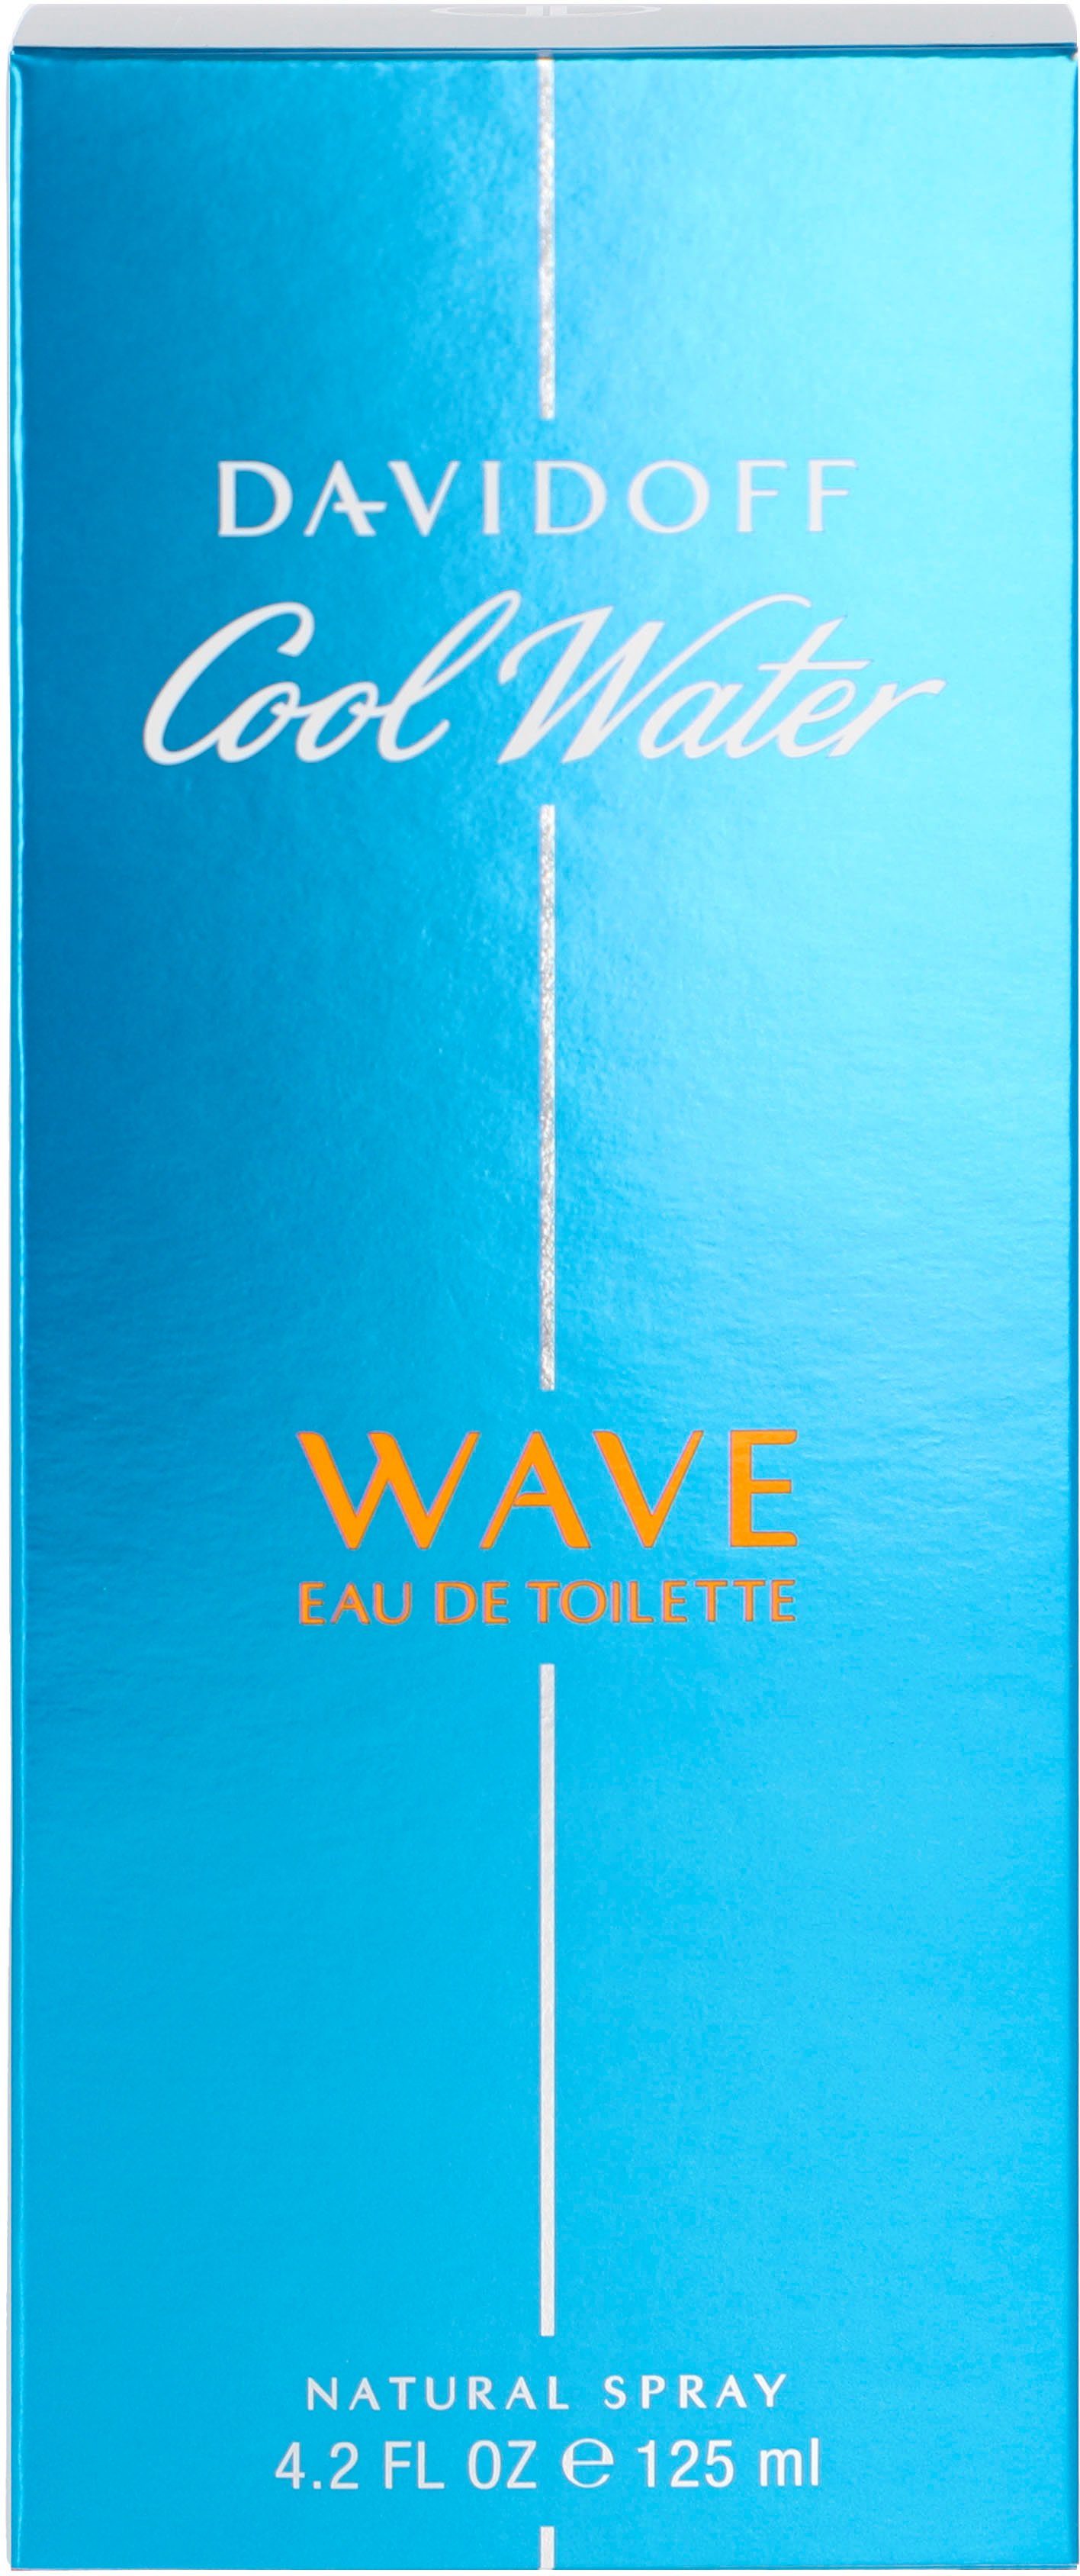 Water Wave Davidoff Cool DAVIDOFF Toilette Eau Man de